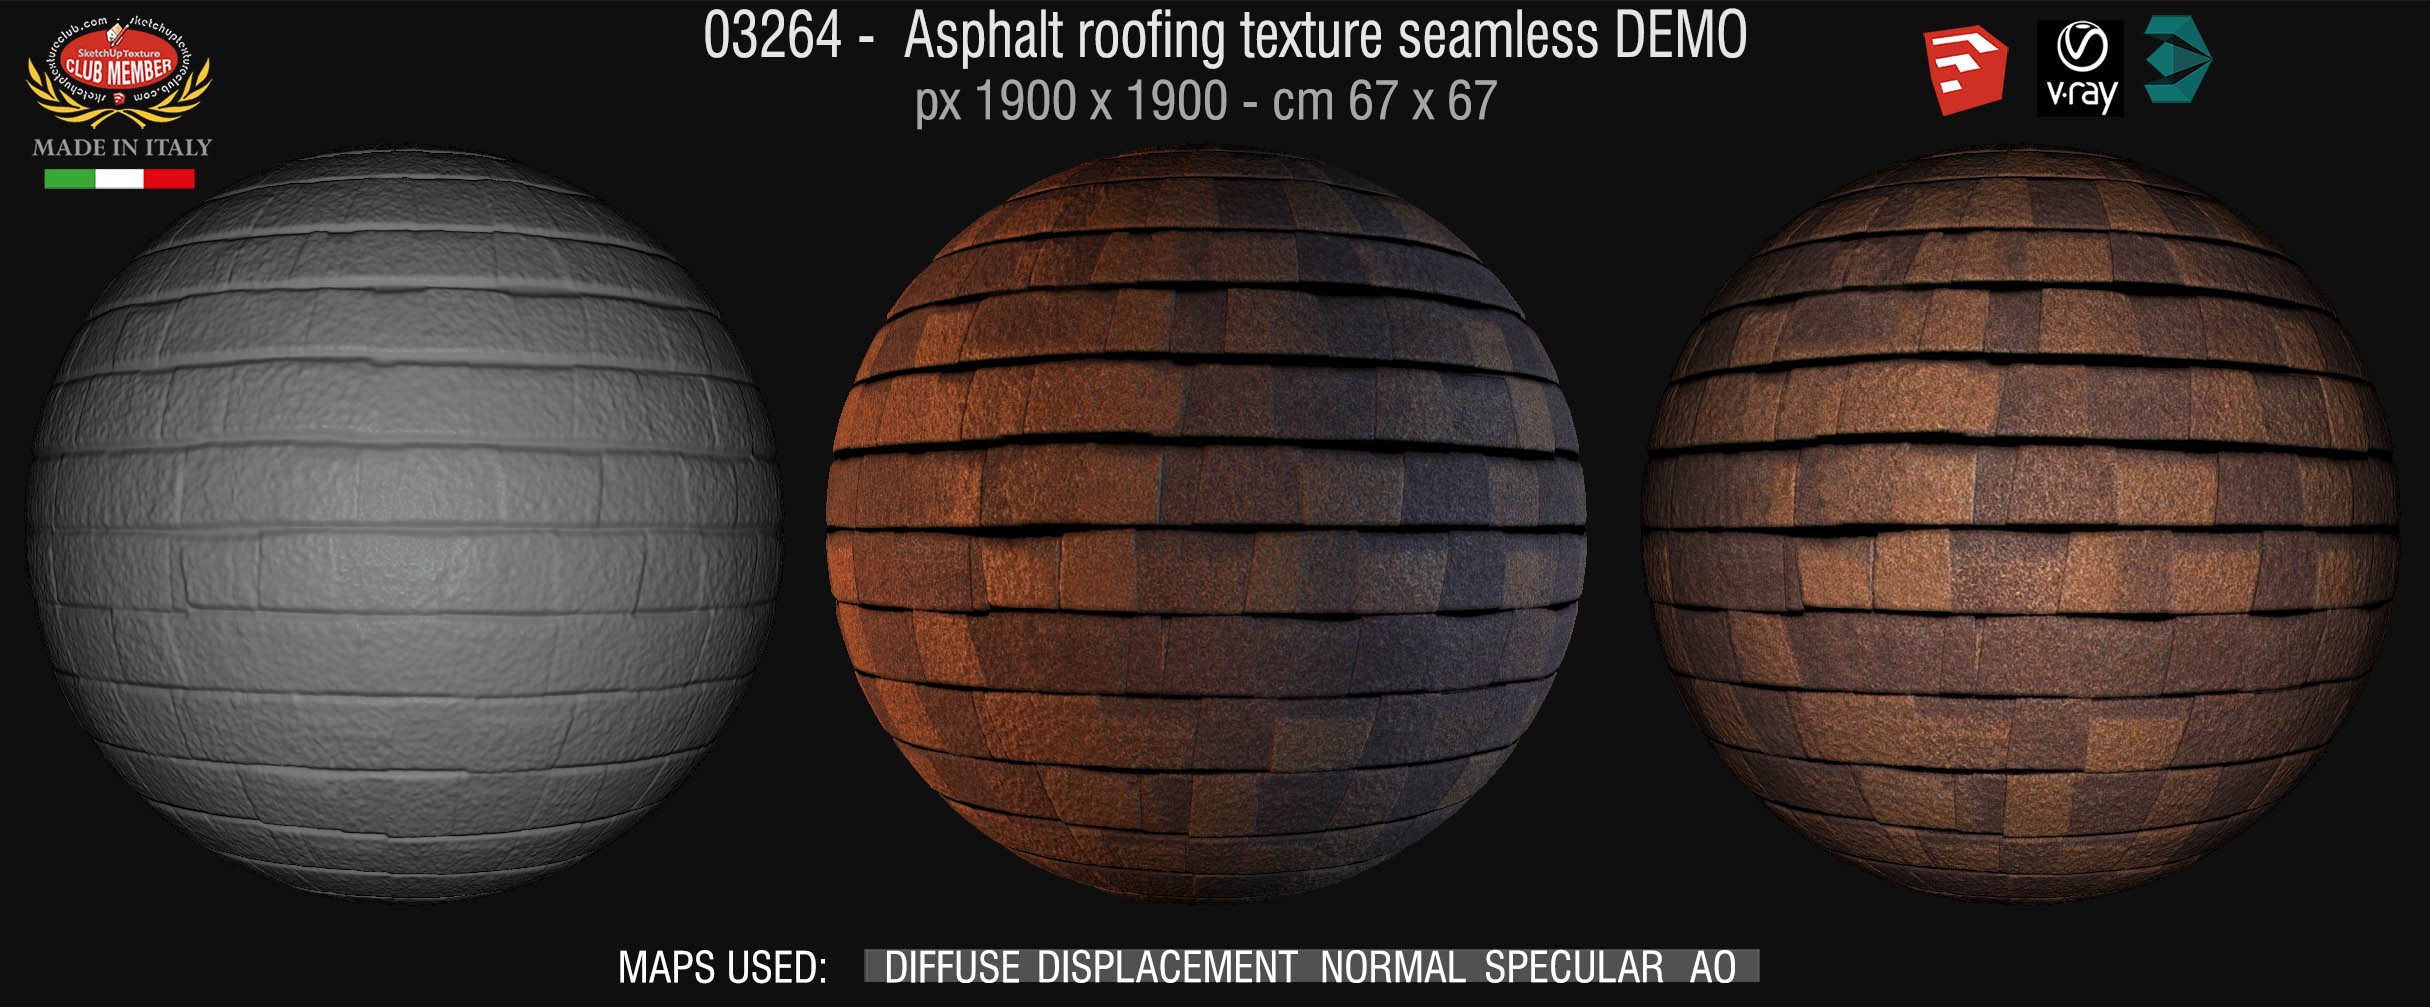 03264 Asphalt roofing texture seamless + maps DEMO